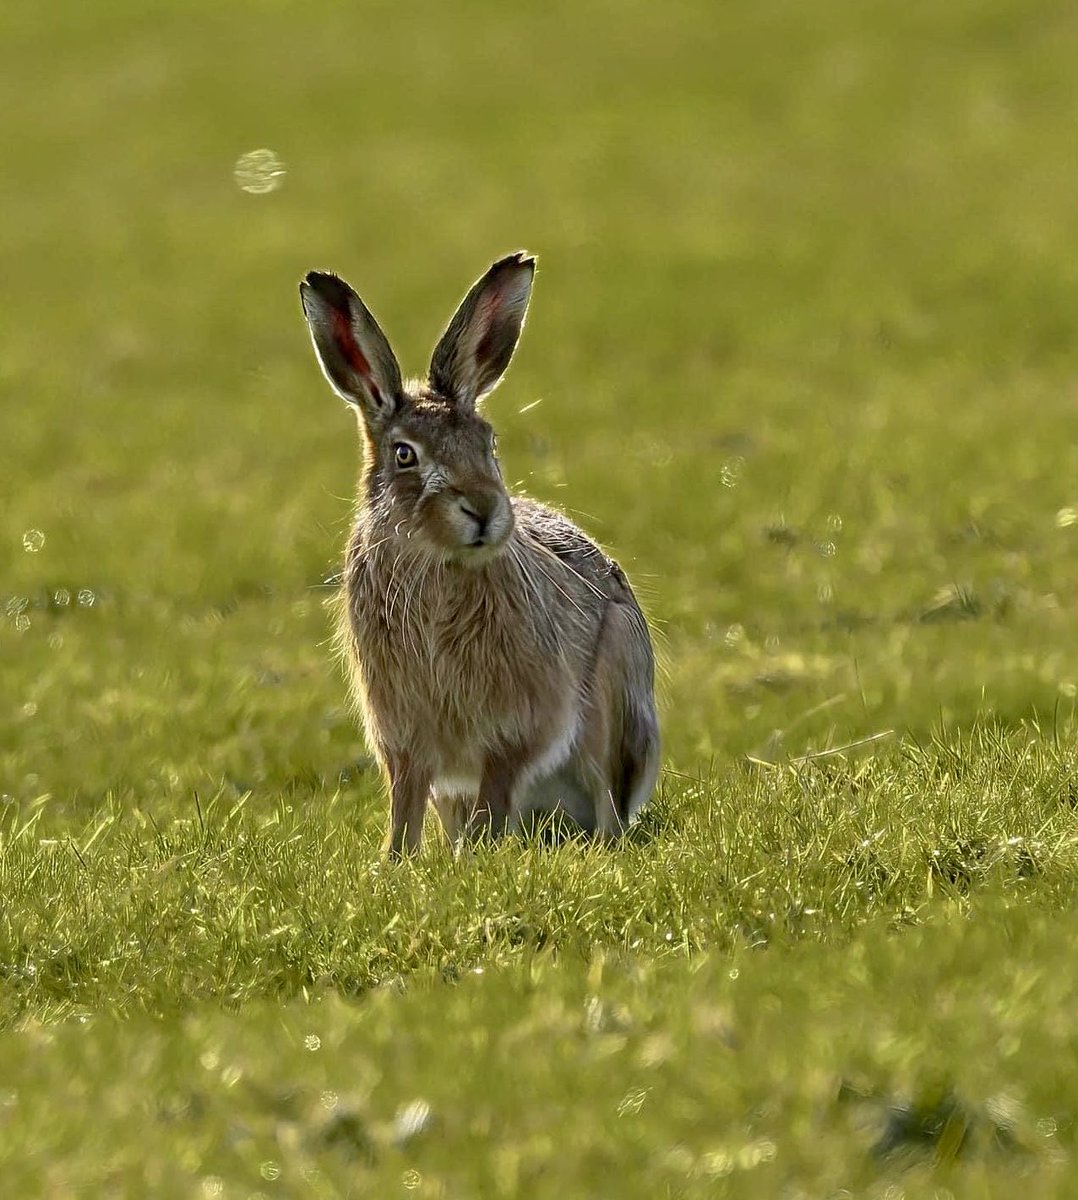 A handsome hare - Spring is definitely here ! 
⁦@WildlifeMag⁩ ⁦@ChrisGPackham⁩ ⁦@wwf_uk⁩